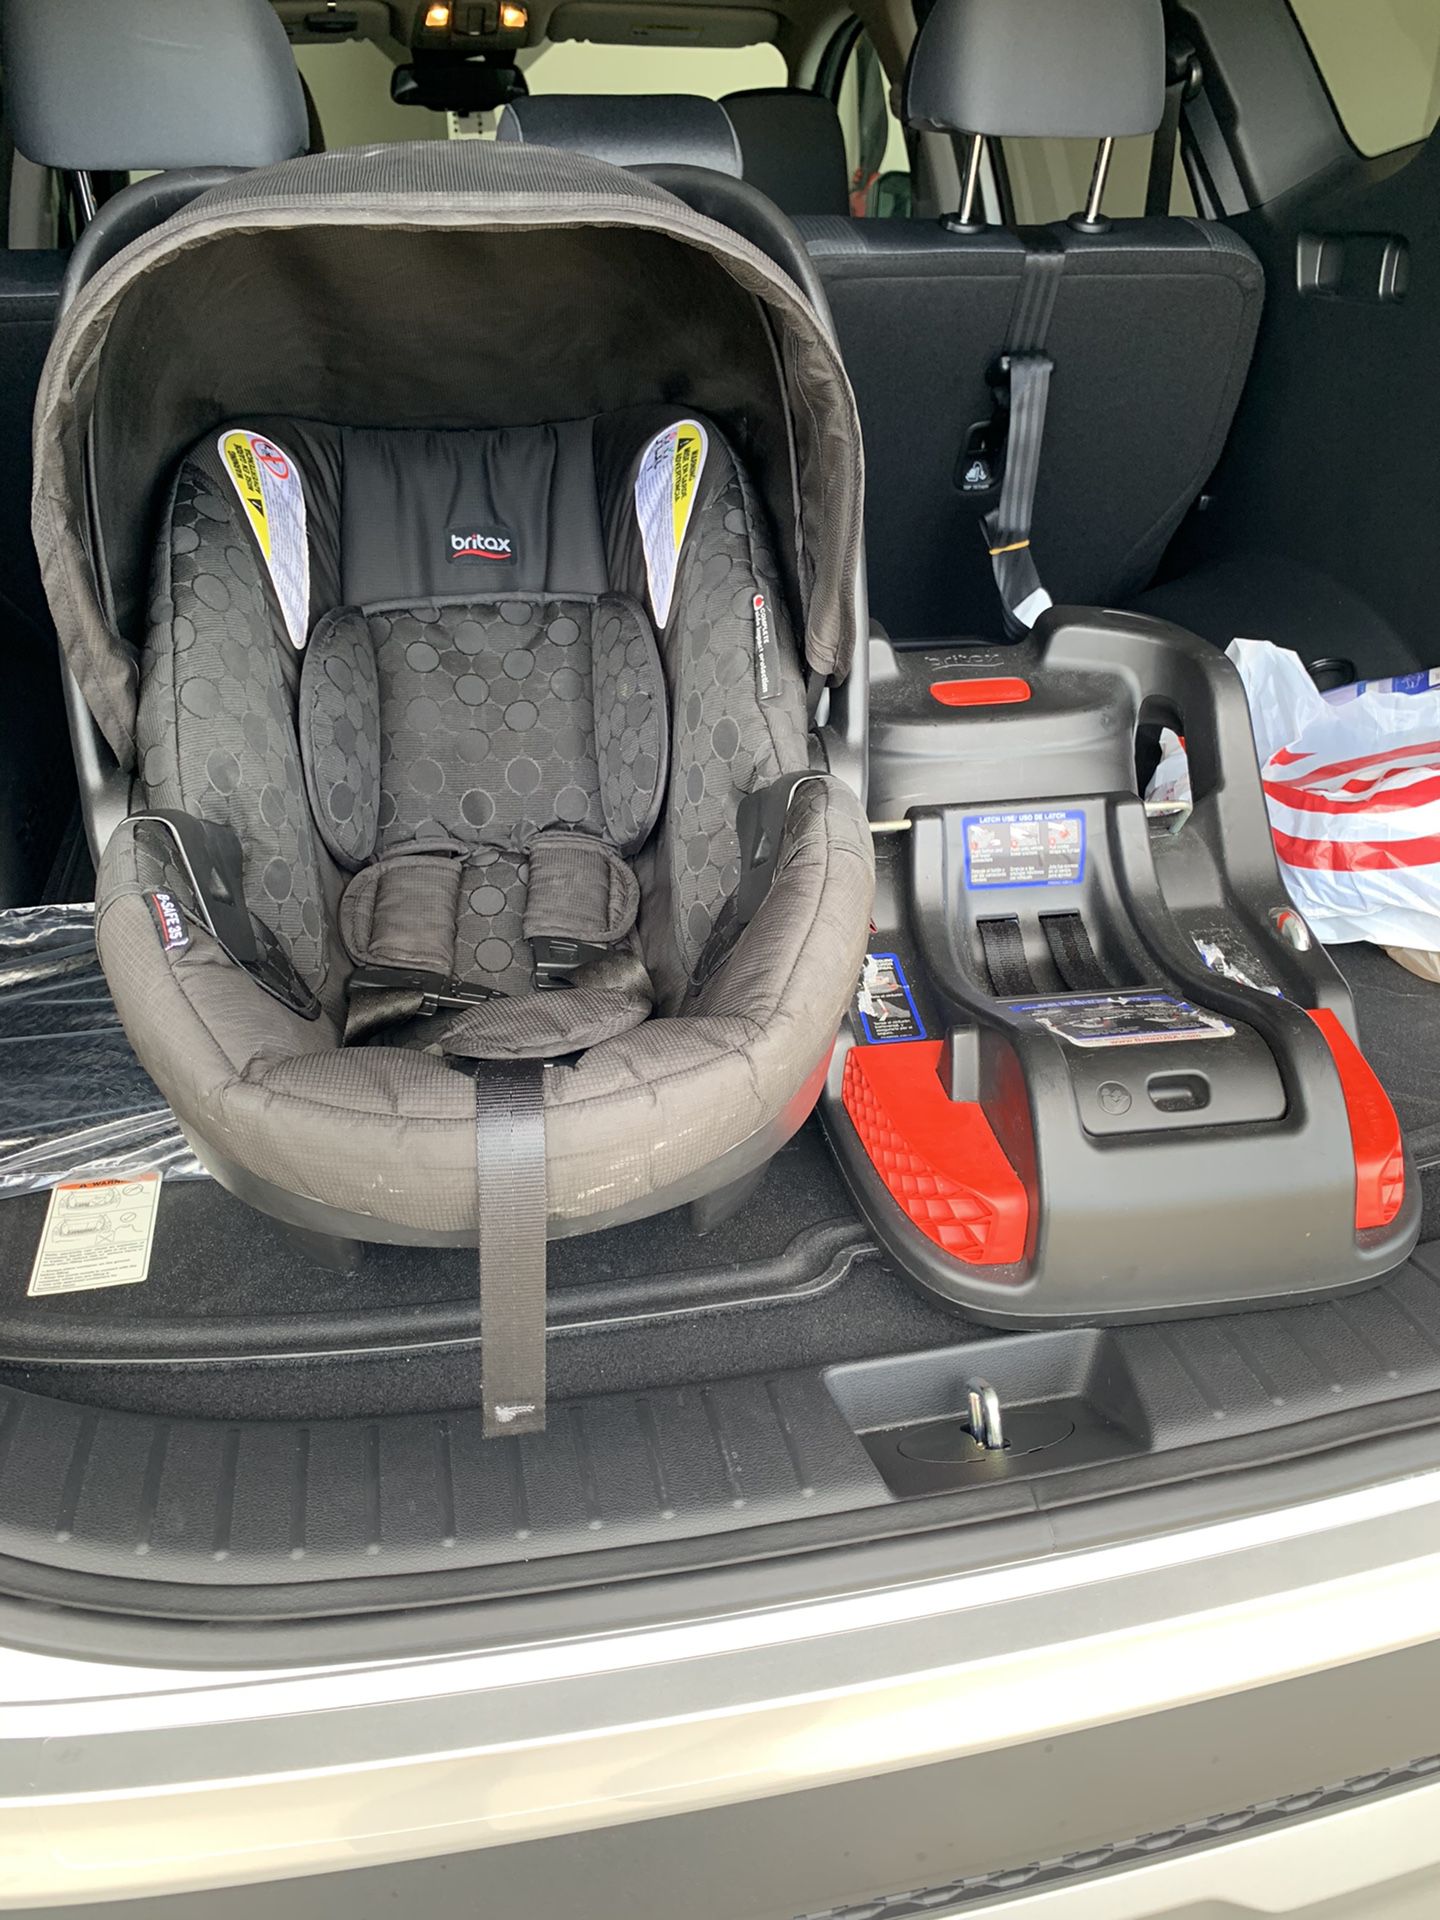 Britax infant car seat like new